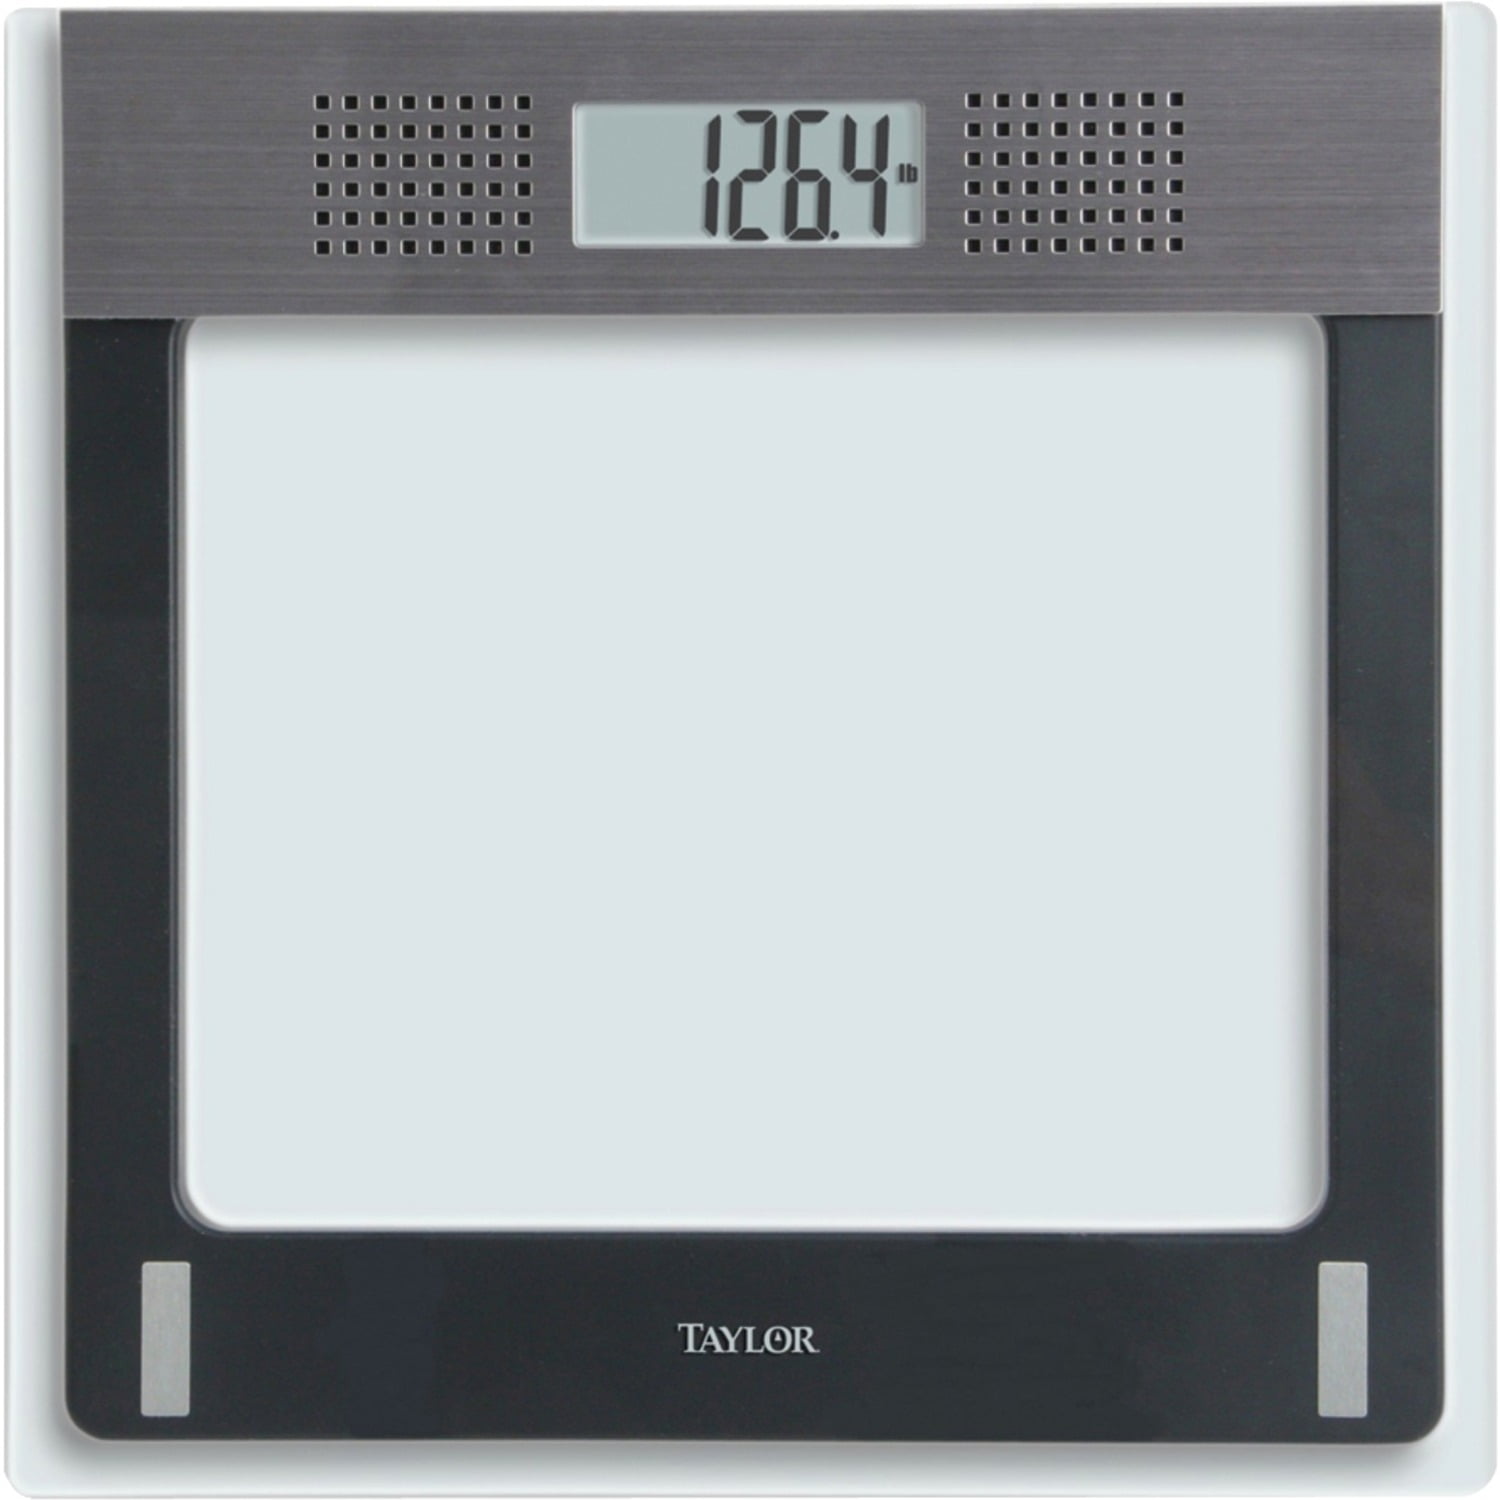 Glass Digital Kitchen Scale, Silver – Taylor USA